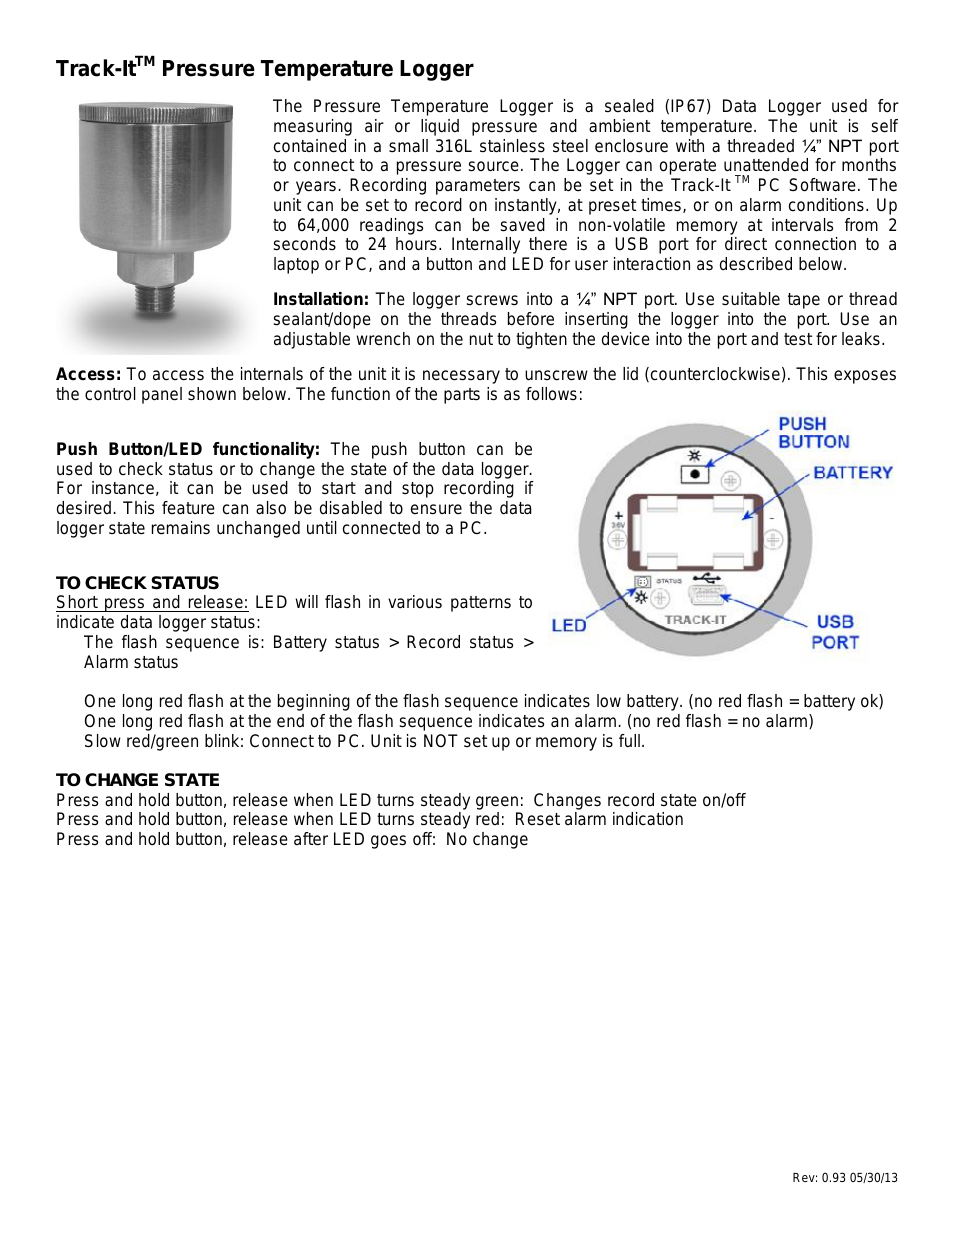 Track-It Pressure Temperature Logger